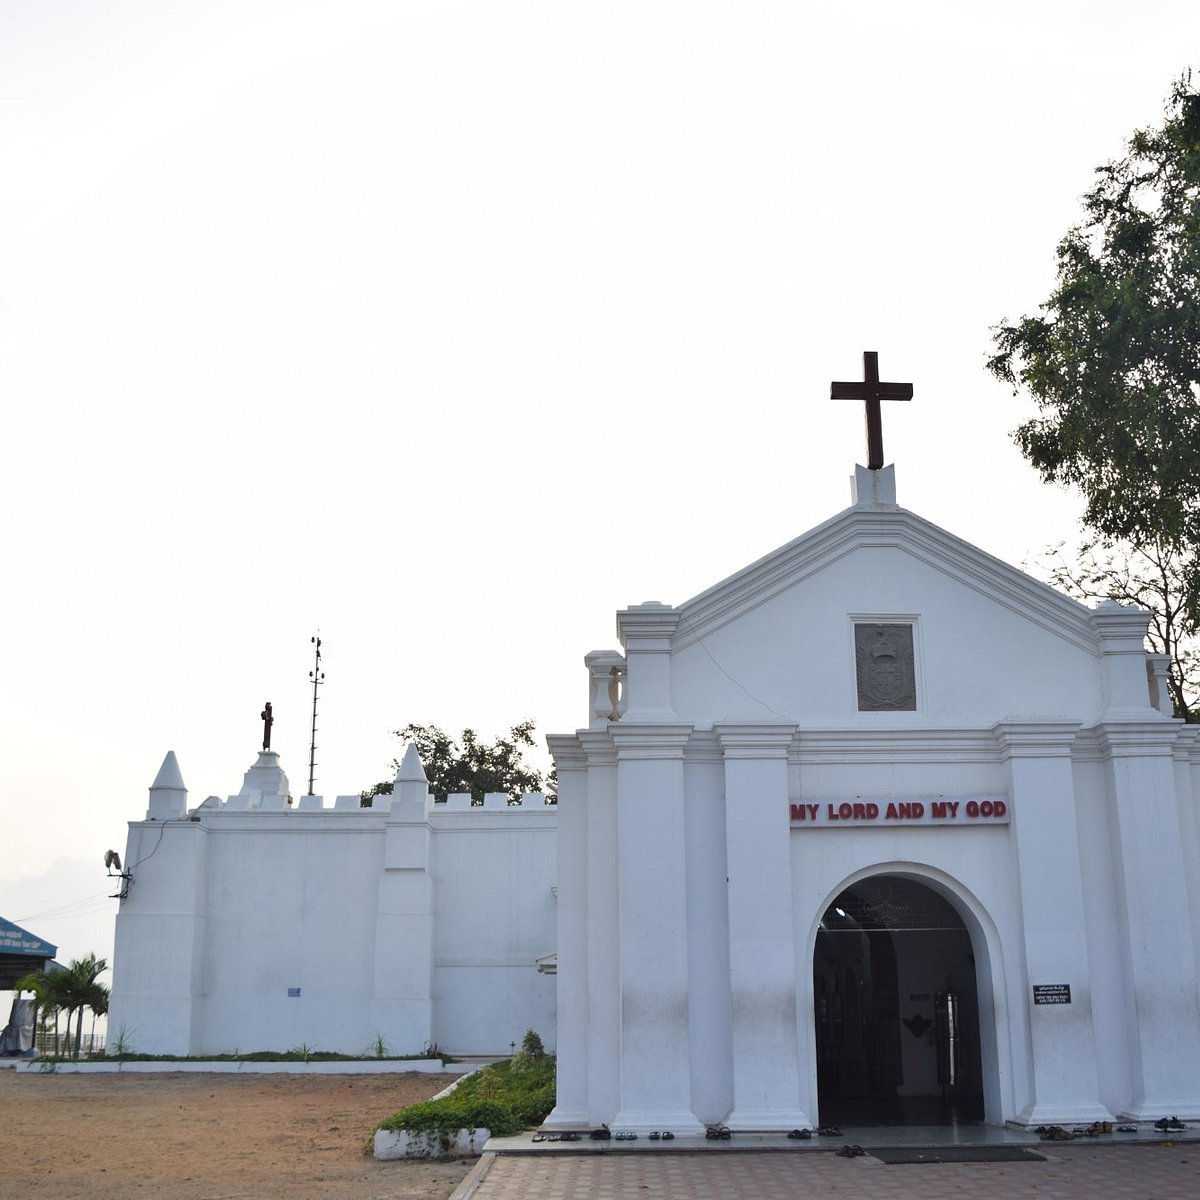 St. Thomas Mount National Shrine, Chennai (Madras)